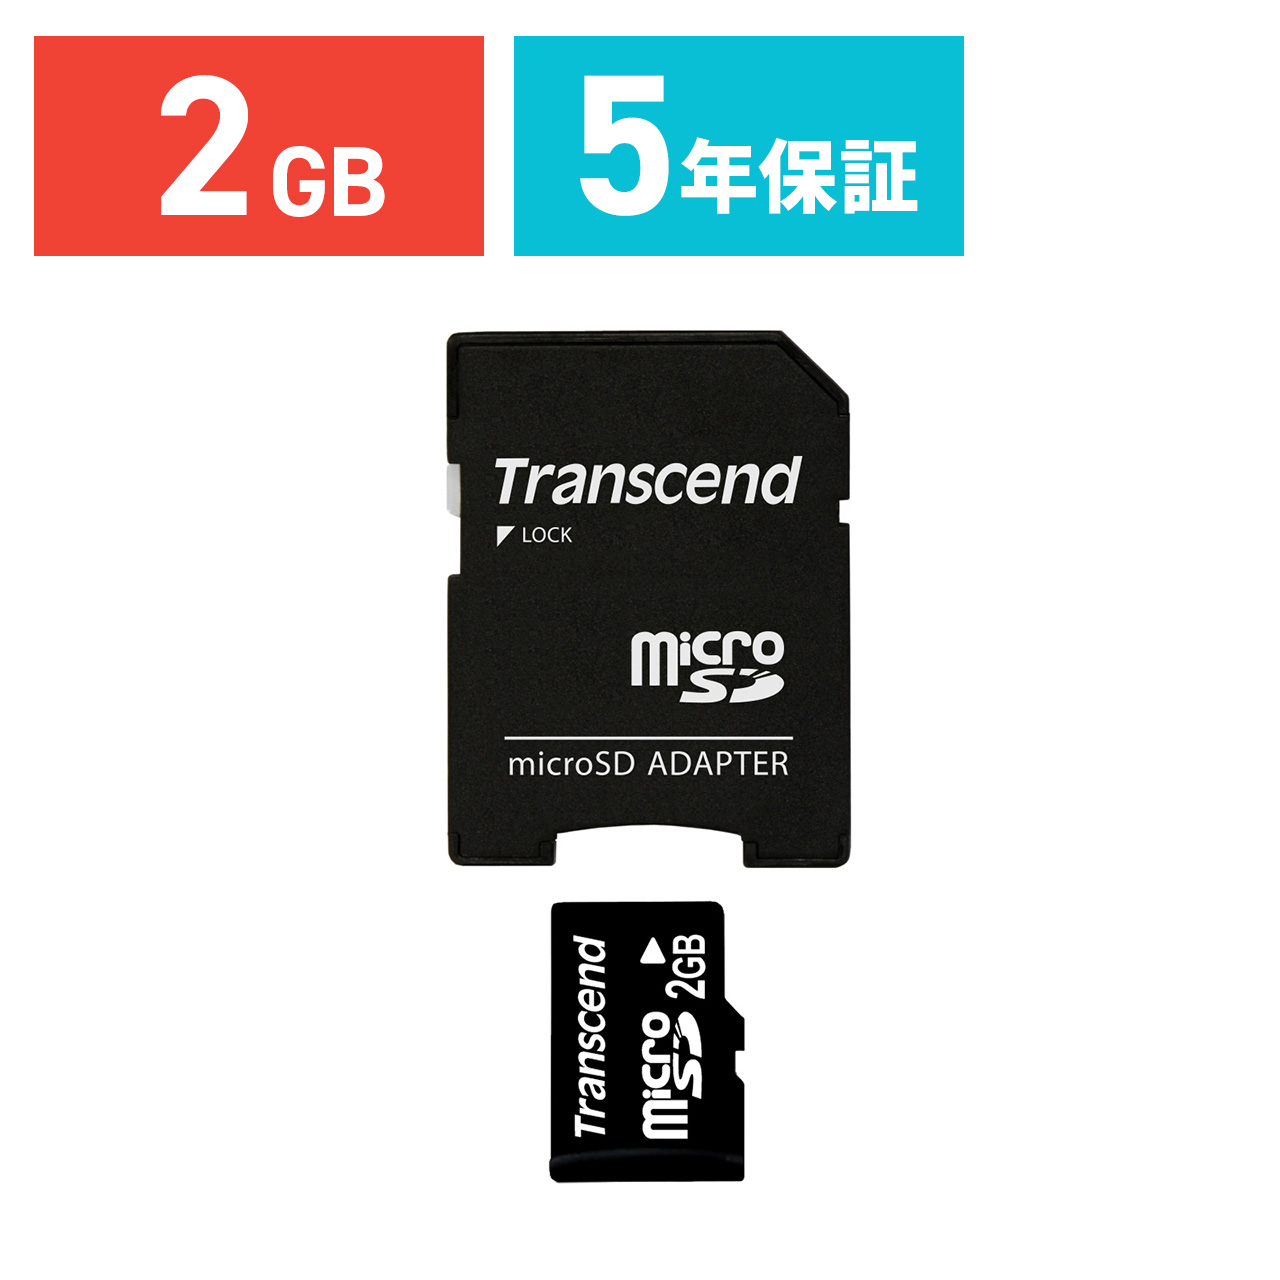 Лучшие микро сд для видеорегистратора. Флешка для карты памяти микро СД. Карта памяти Transcend ts1gusd-2. SD Card 2gb. SD карта MICROSD.